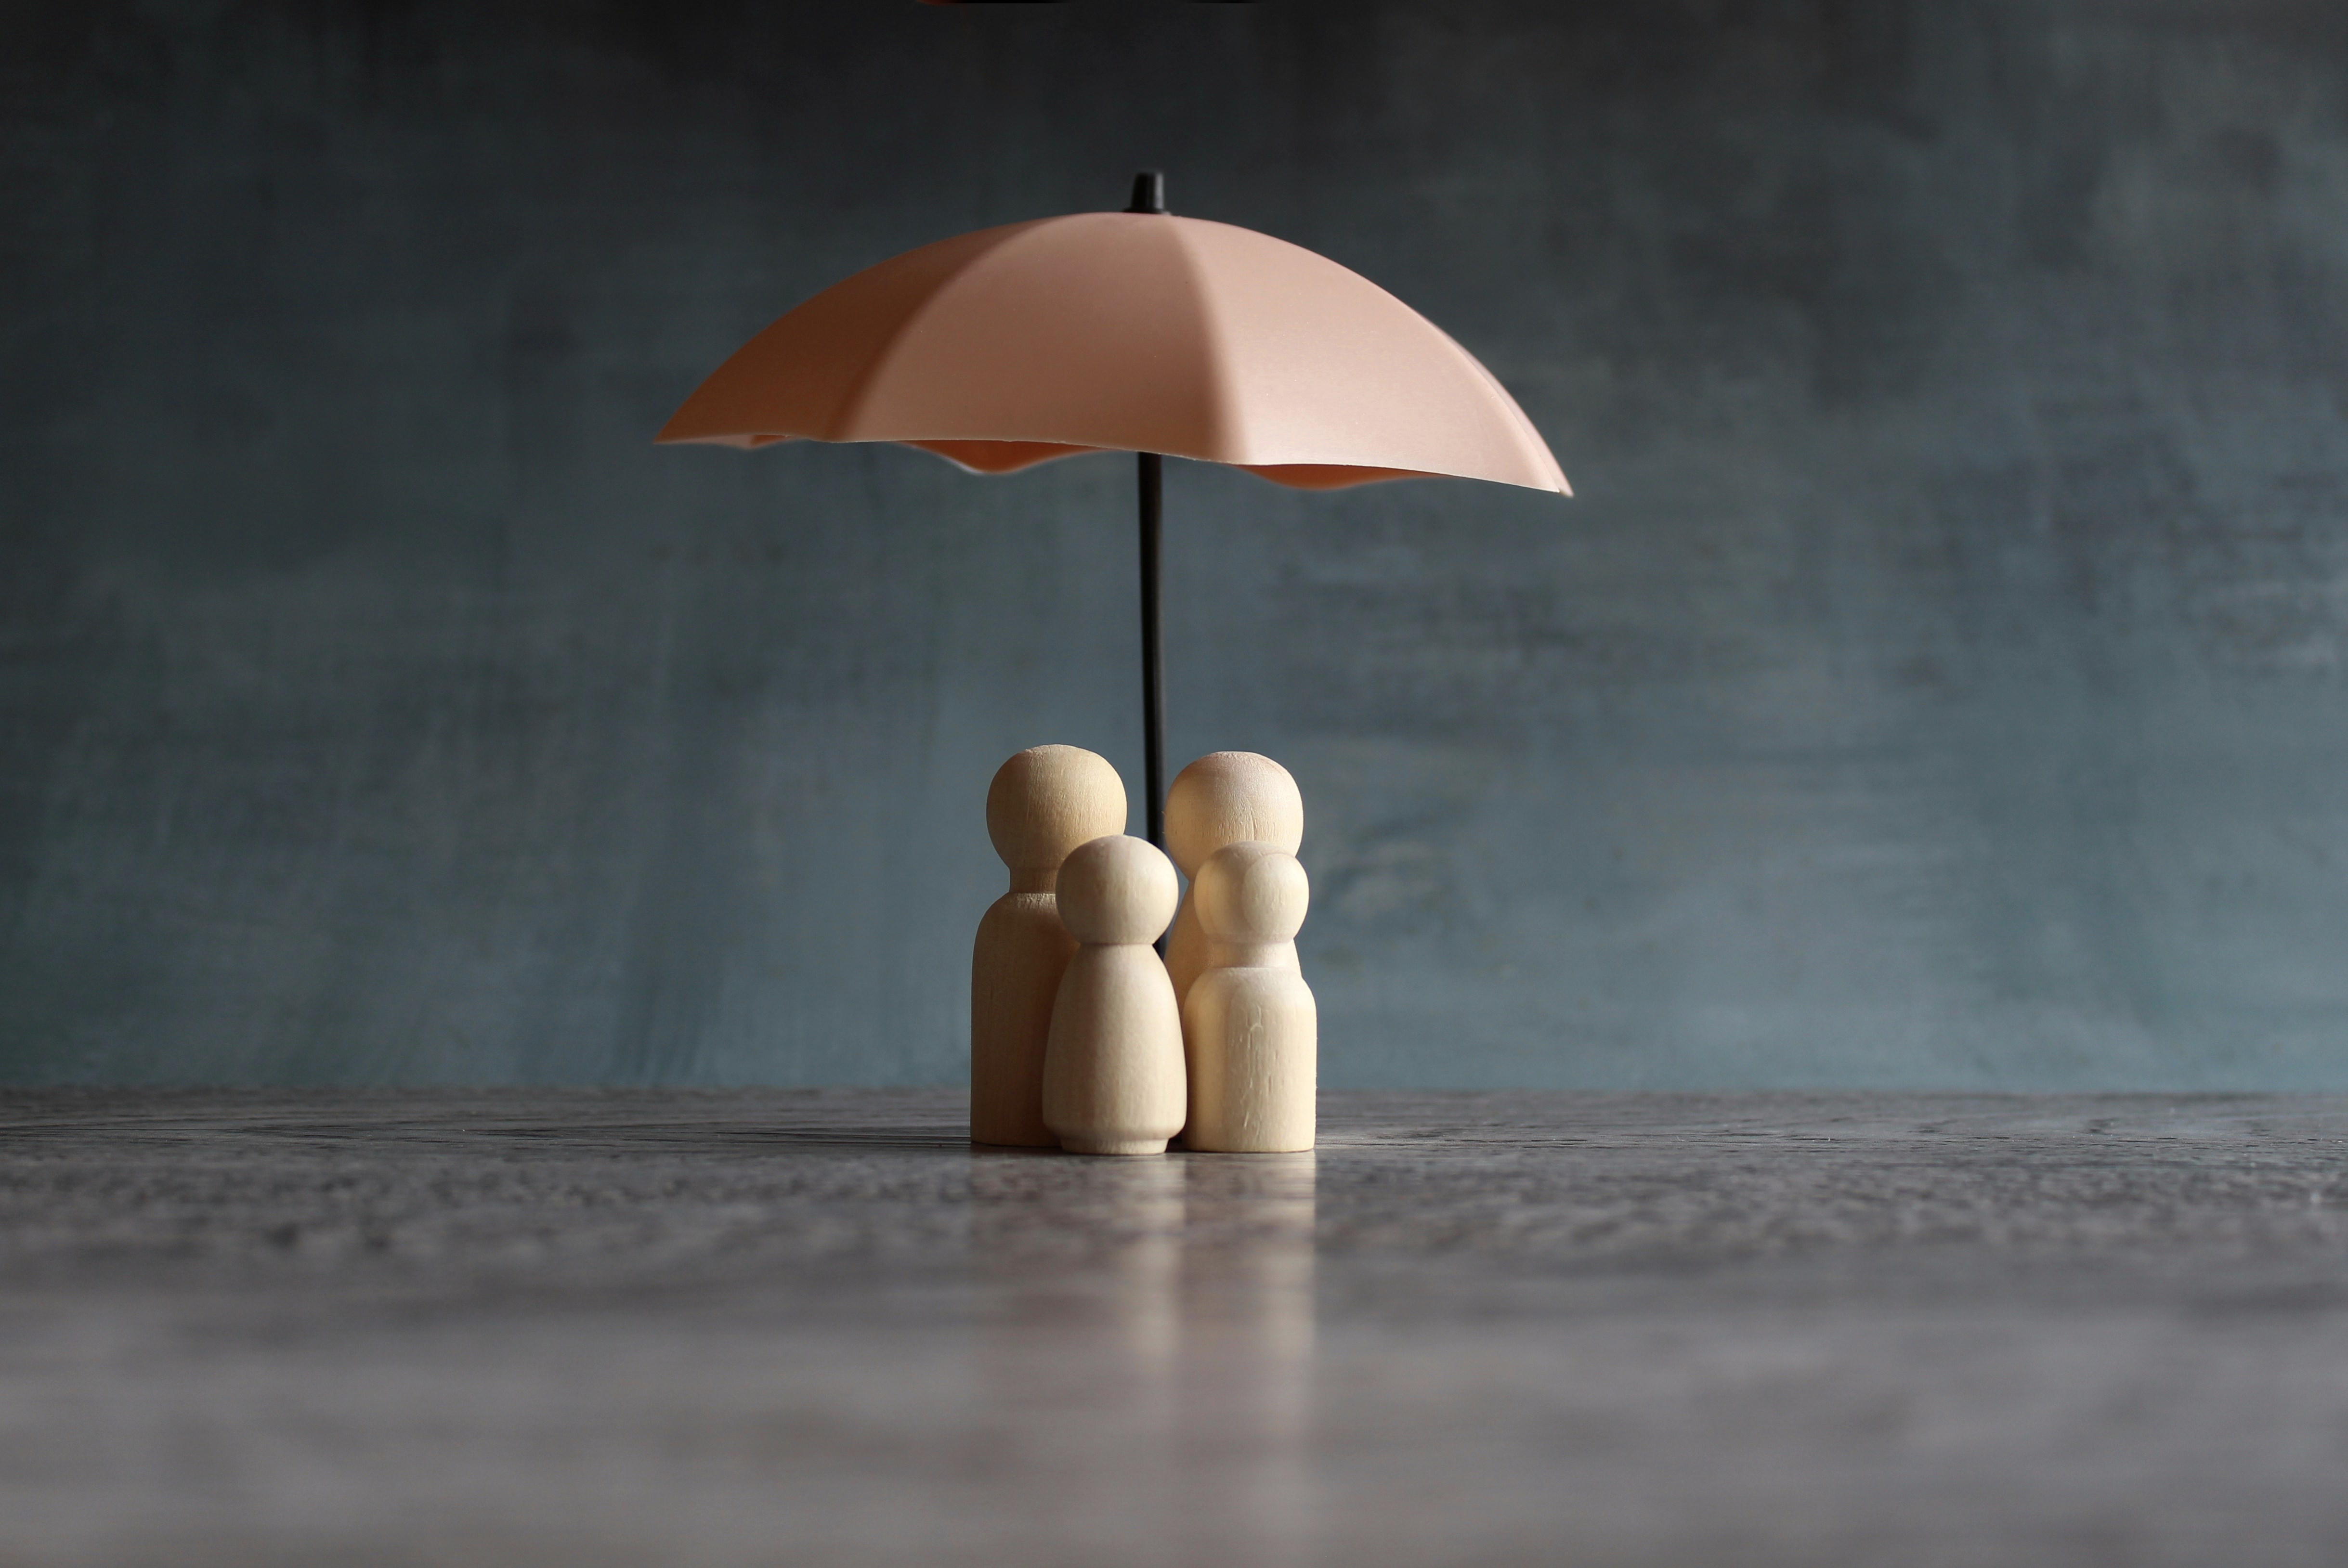 En familj under paraply